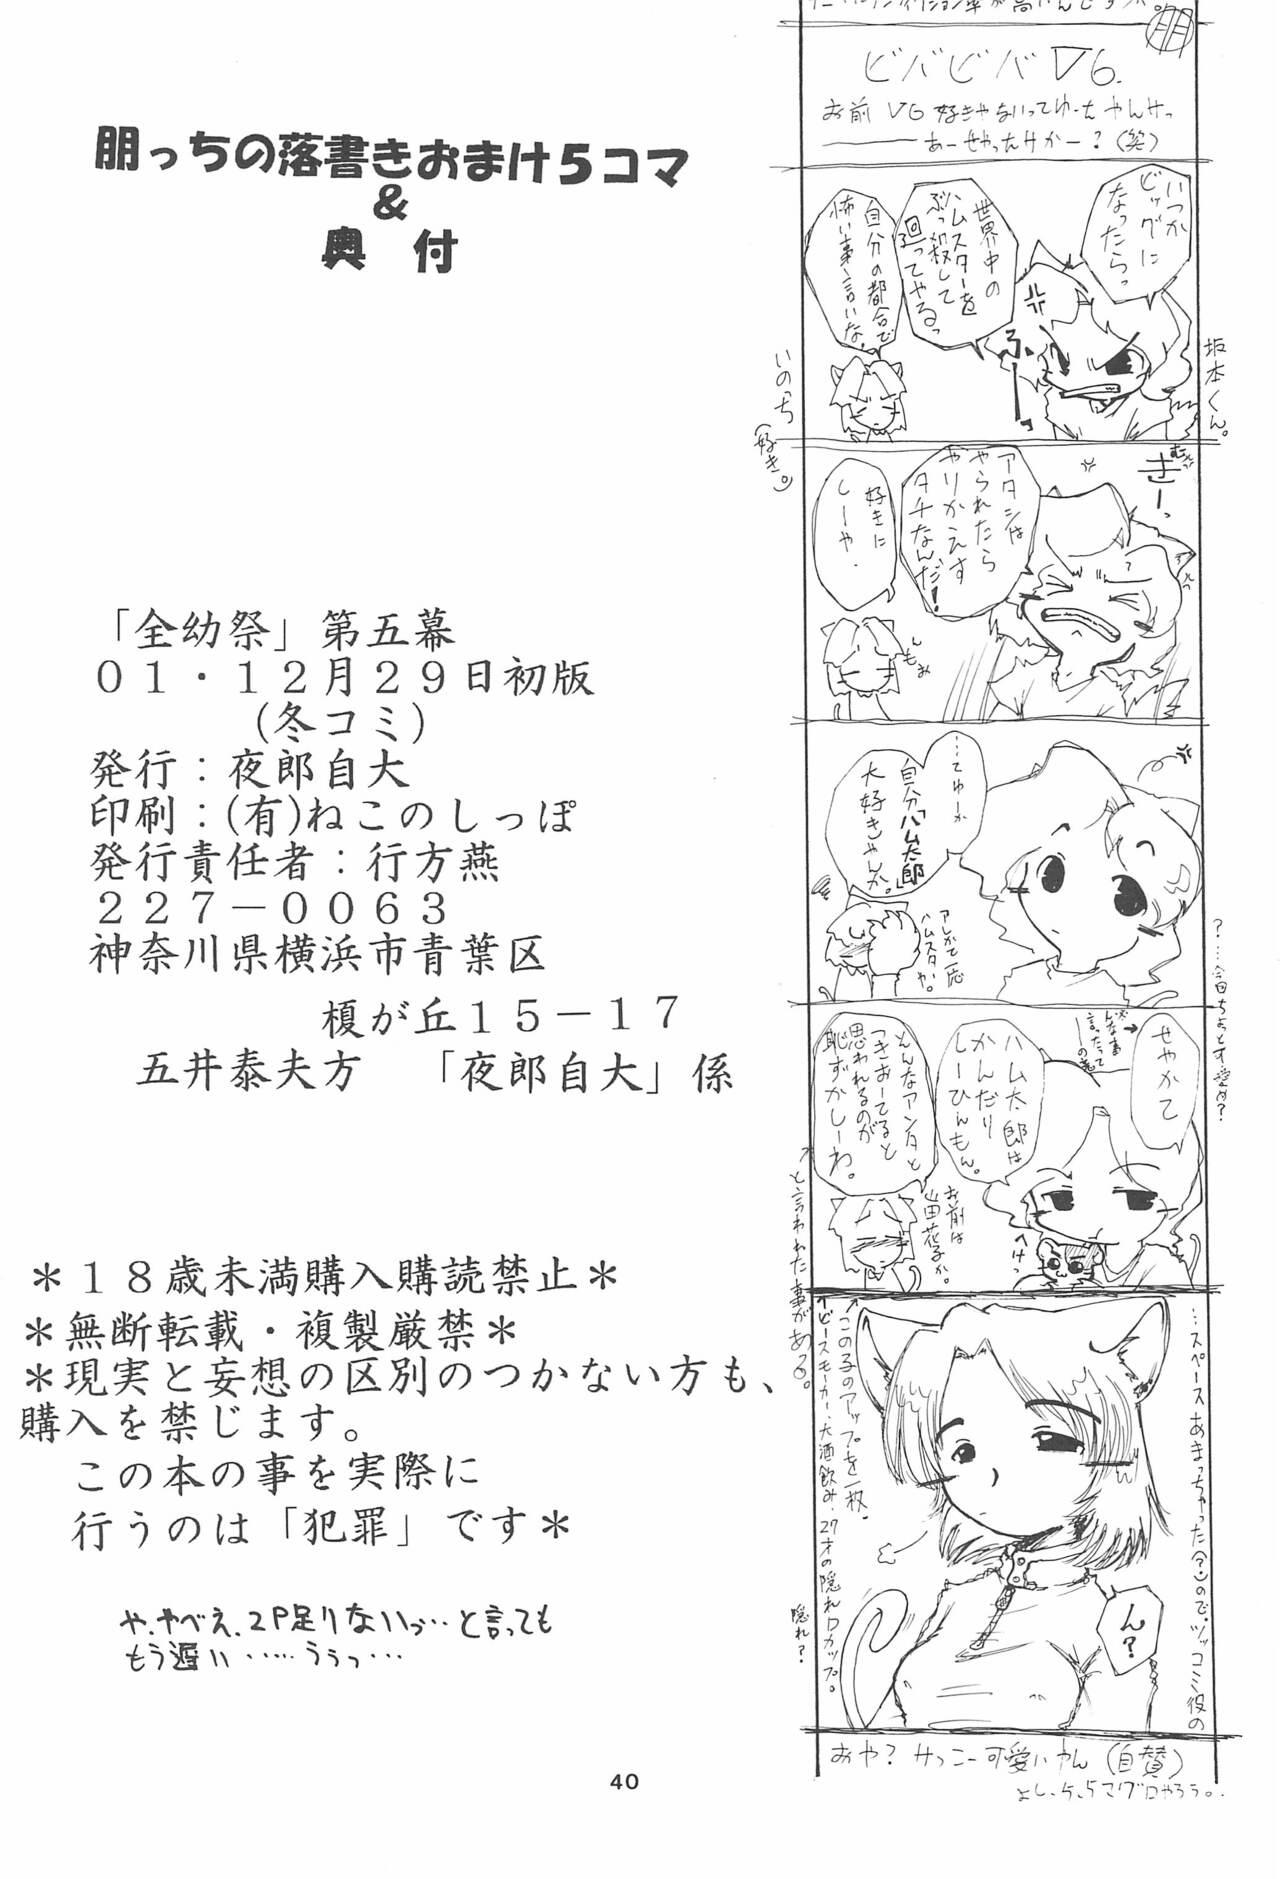 Zenyousai Vol. 5 39